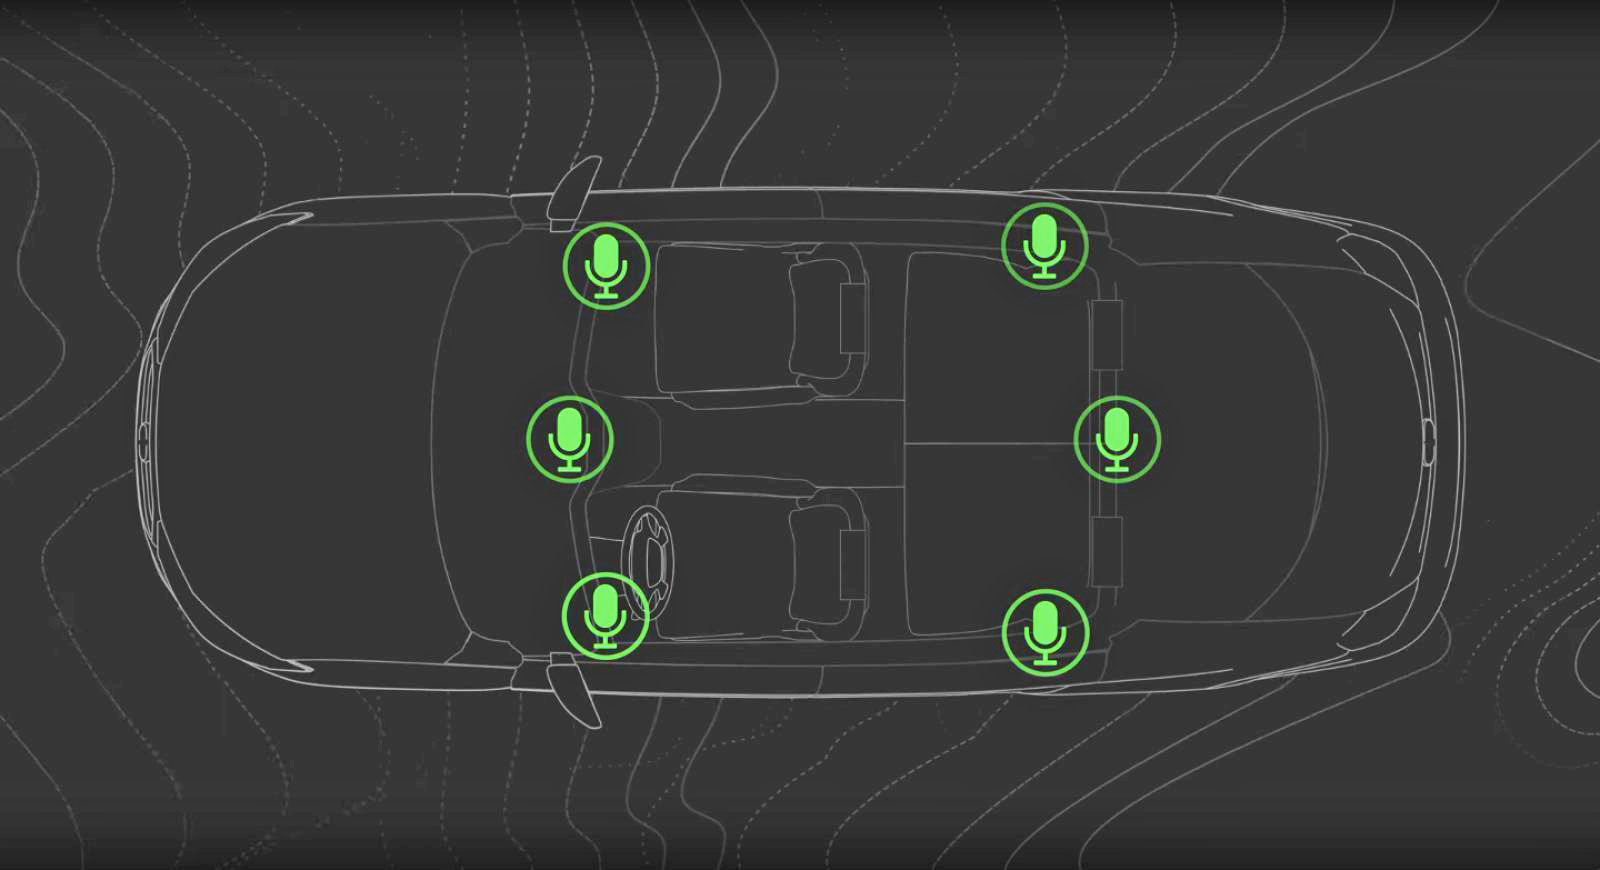 Bose 自動車の走行ノイズを消す車載音響技術 Quietcomfort Road Noise Control を発表